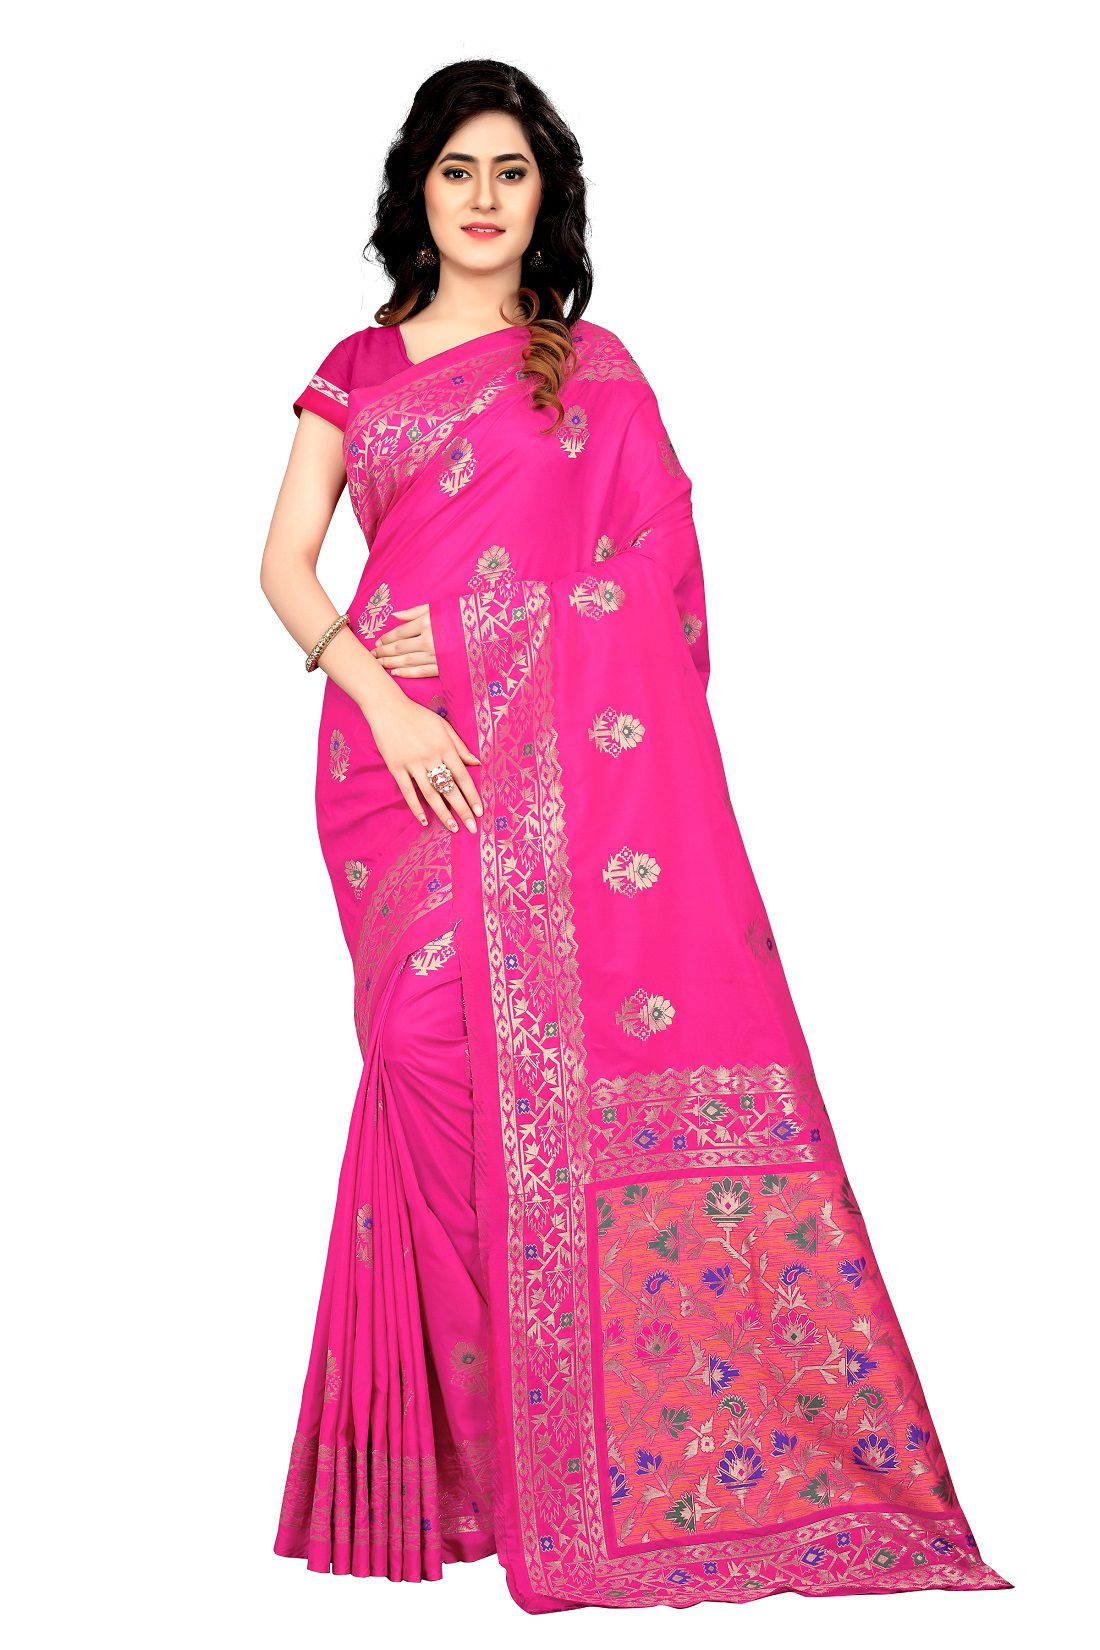 Shree Hari Creation pink Art Silk Saree - Buy Shree Hari Creation pink ...